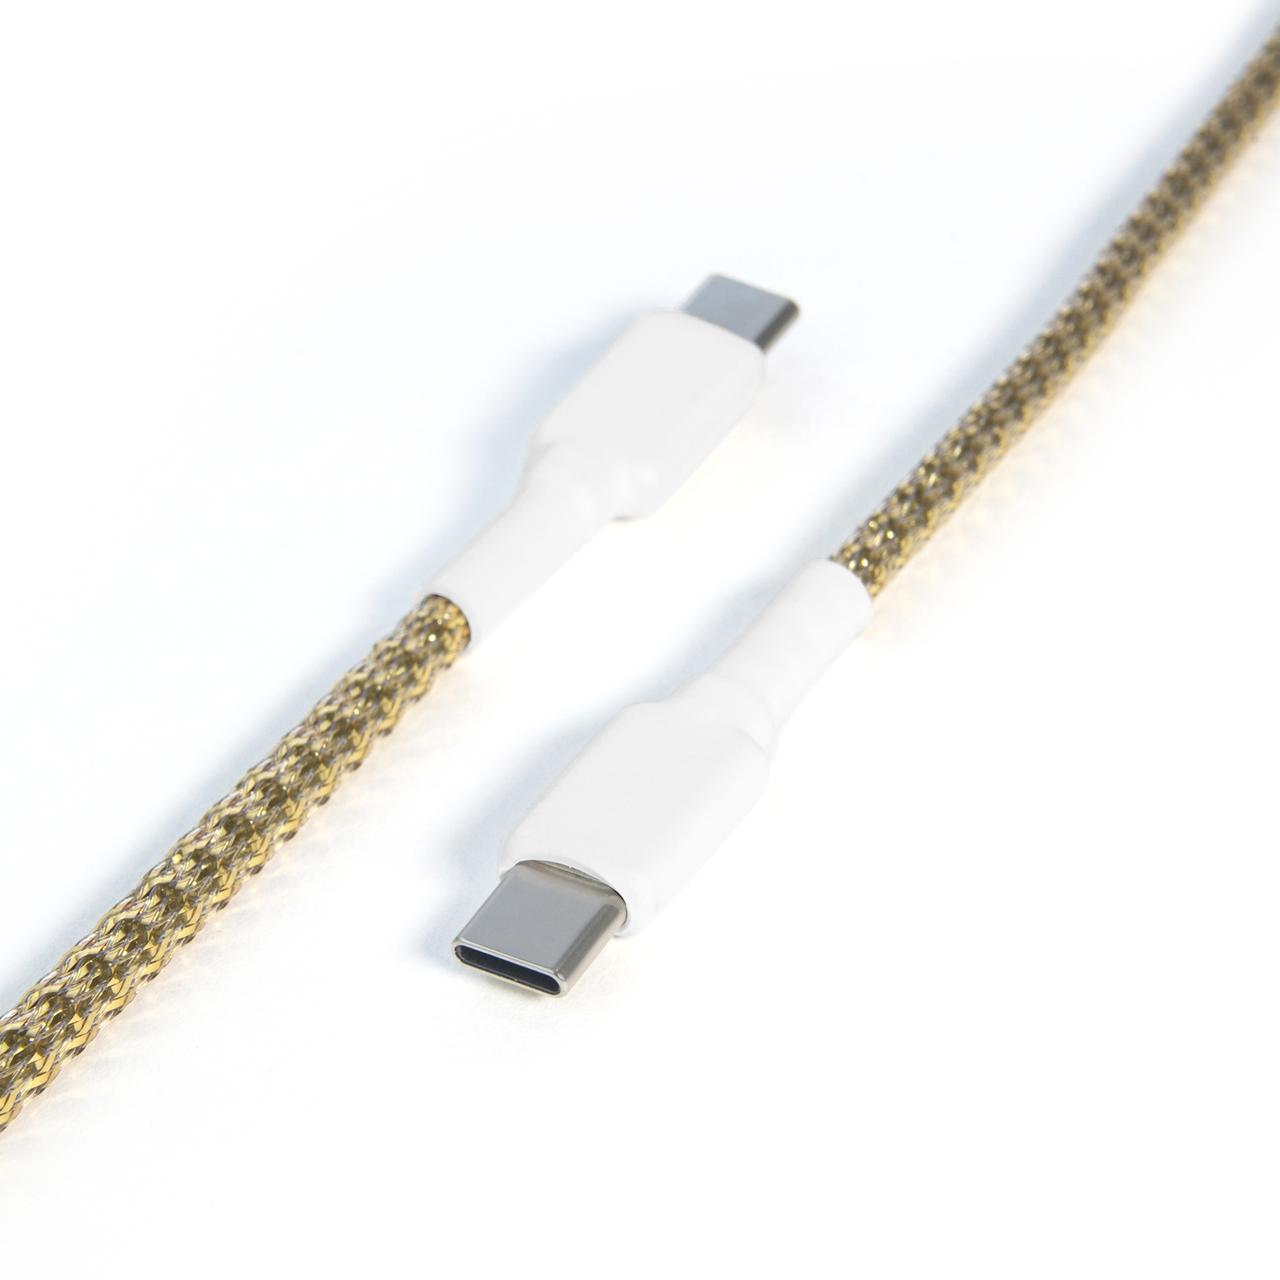 cable salad 100 W Ladekabel USB-C zu USB-C für Laptop & Smartphone